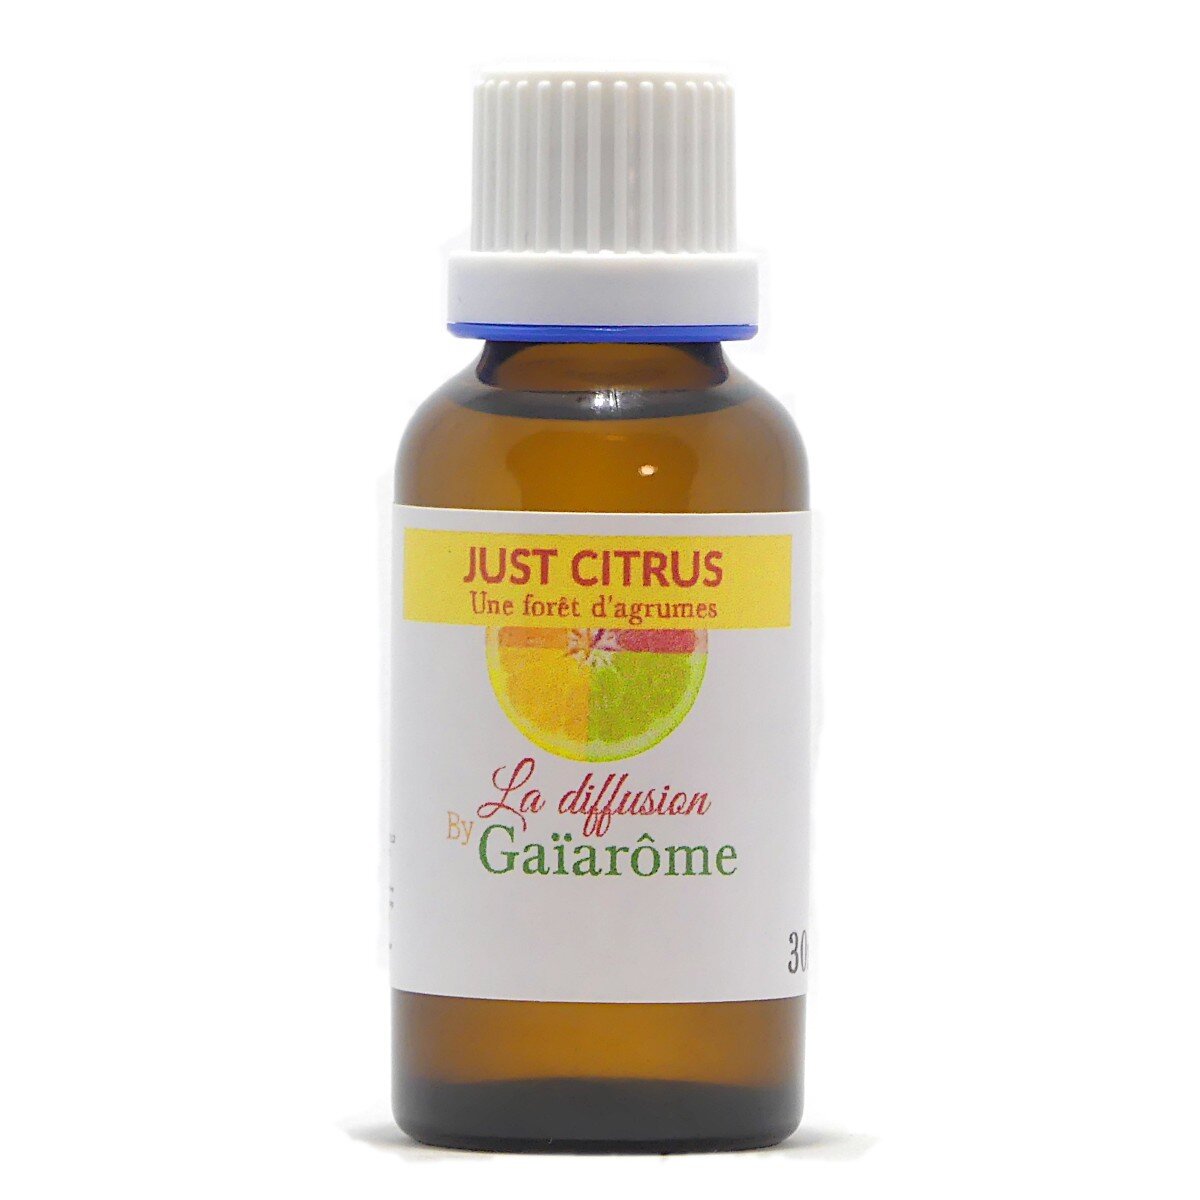 Just Citrus - La diffusion By Gaïarôme